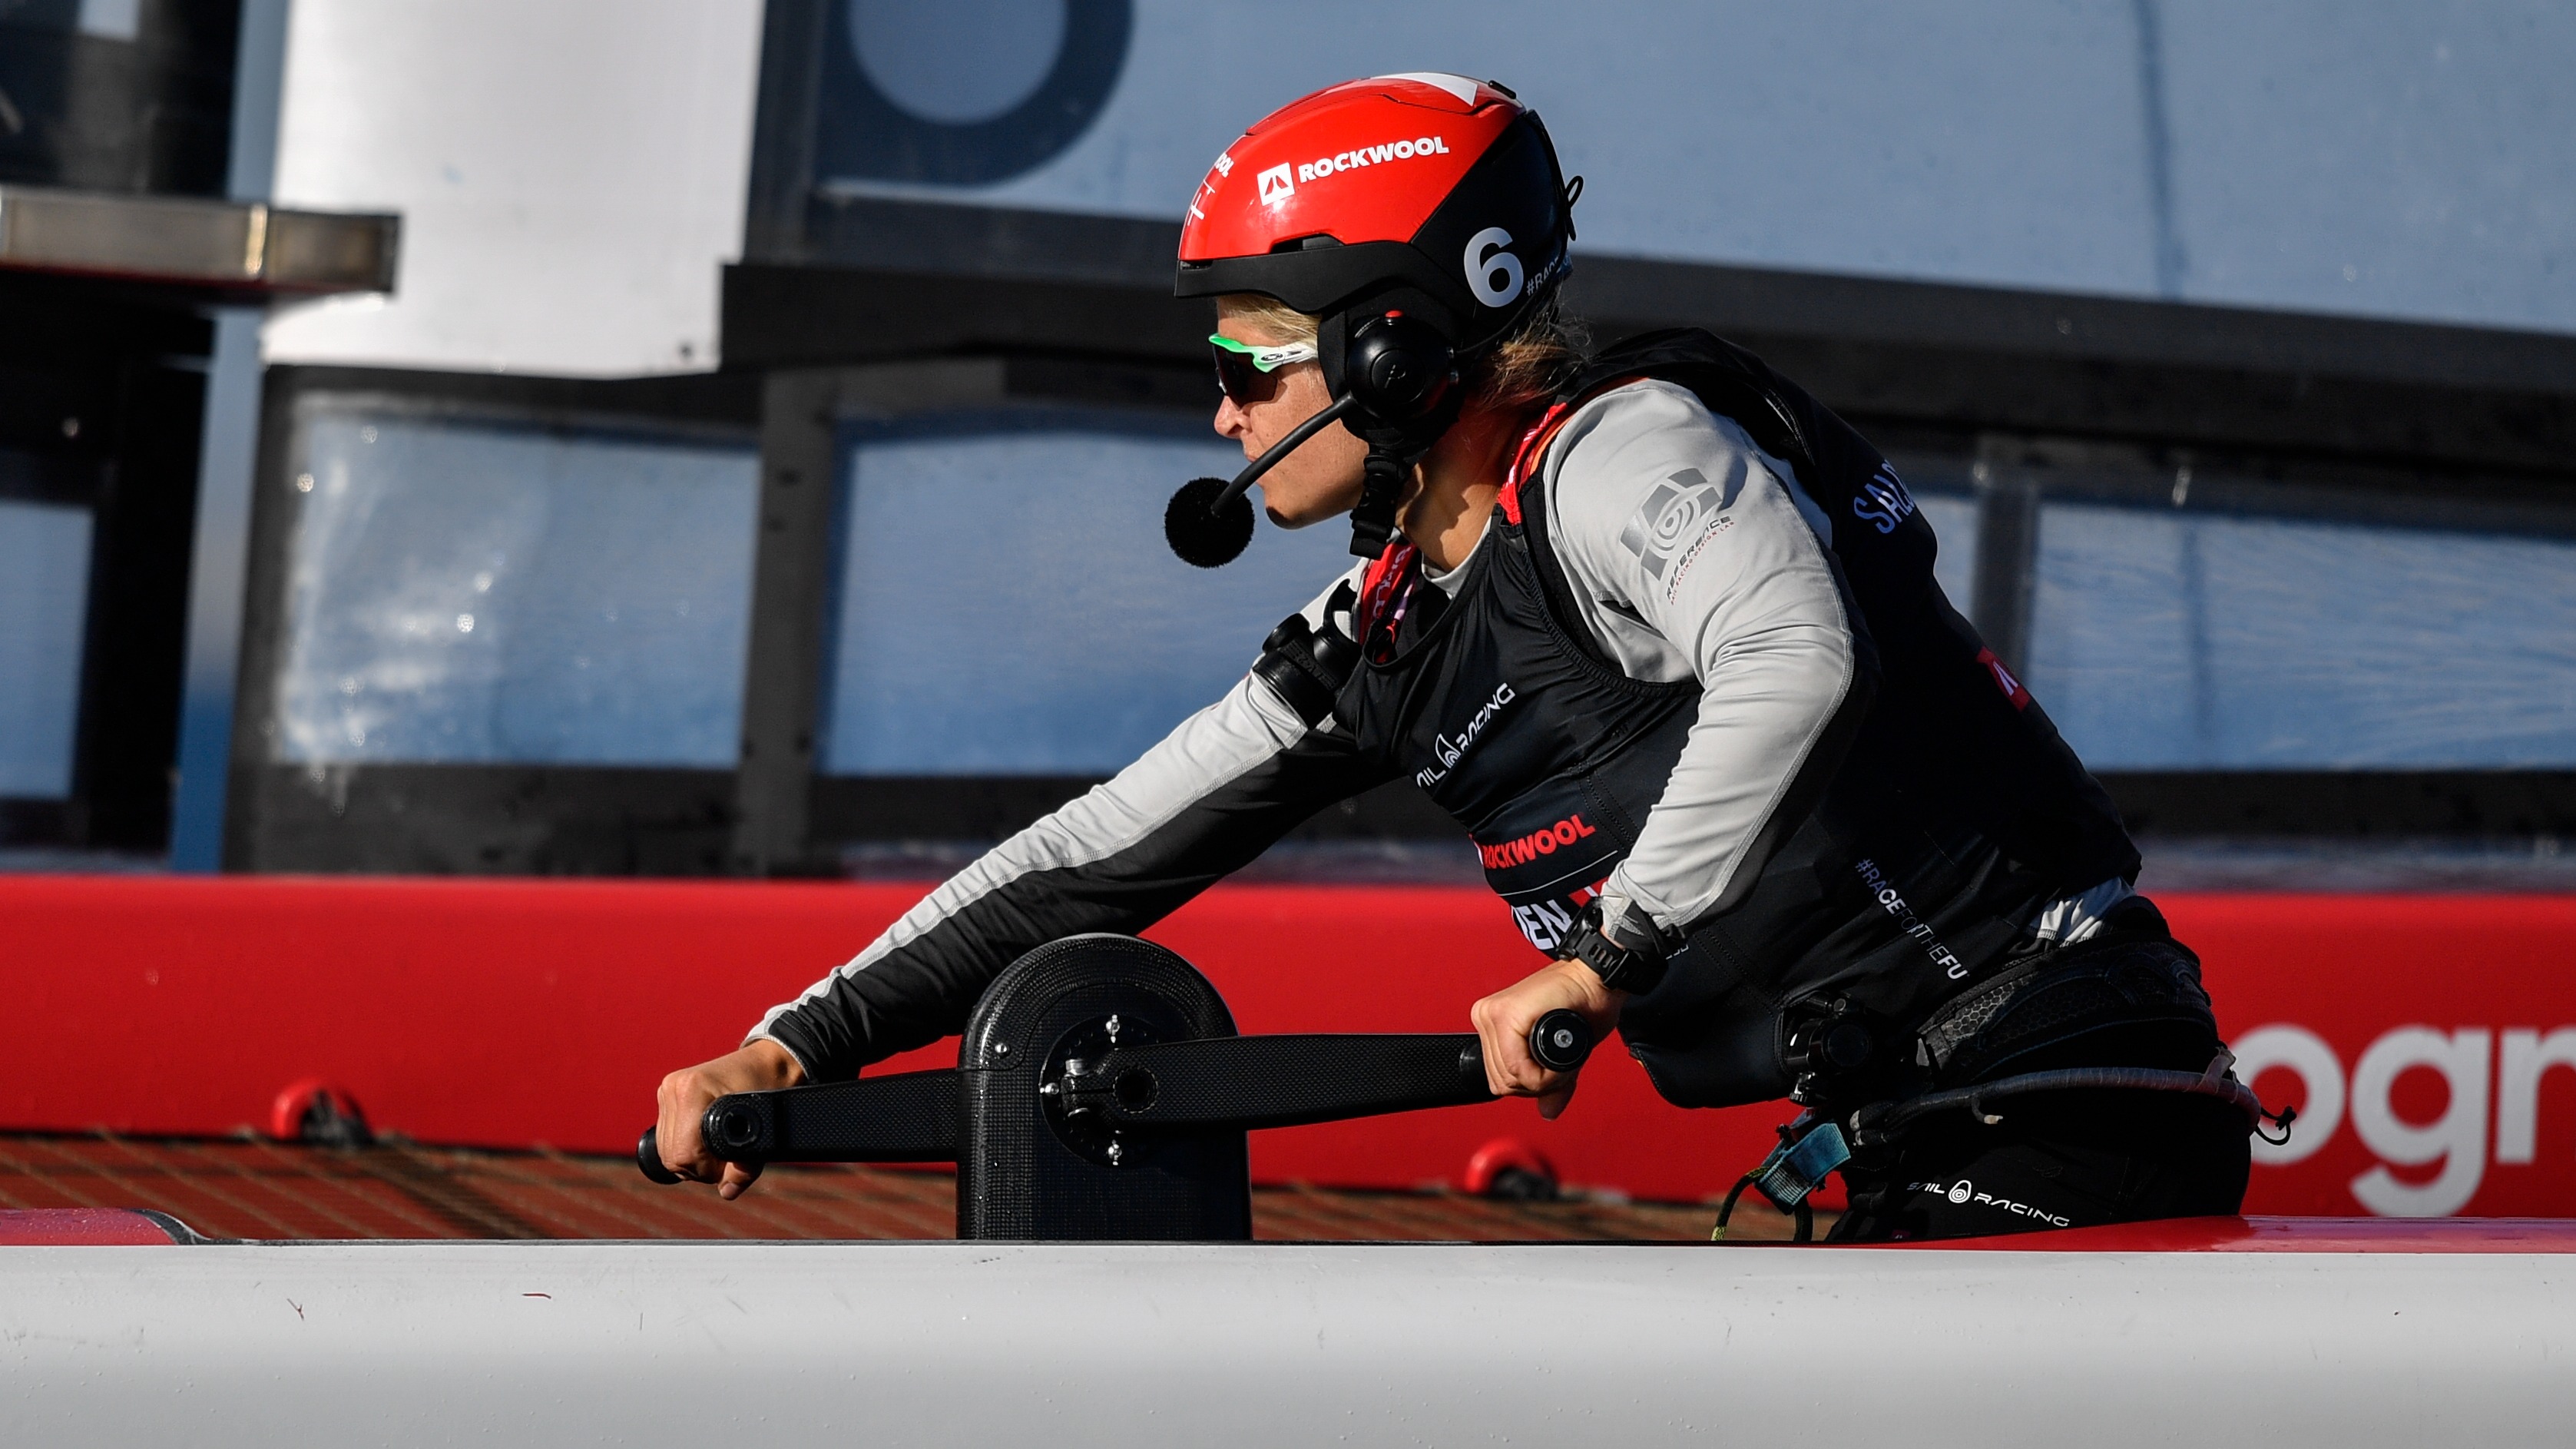 ROCKWOOL Denmark SailGP Team athlete Katja Salskov-Iversen in the grinder position 